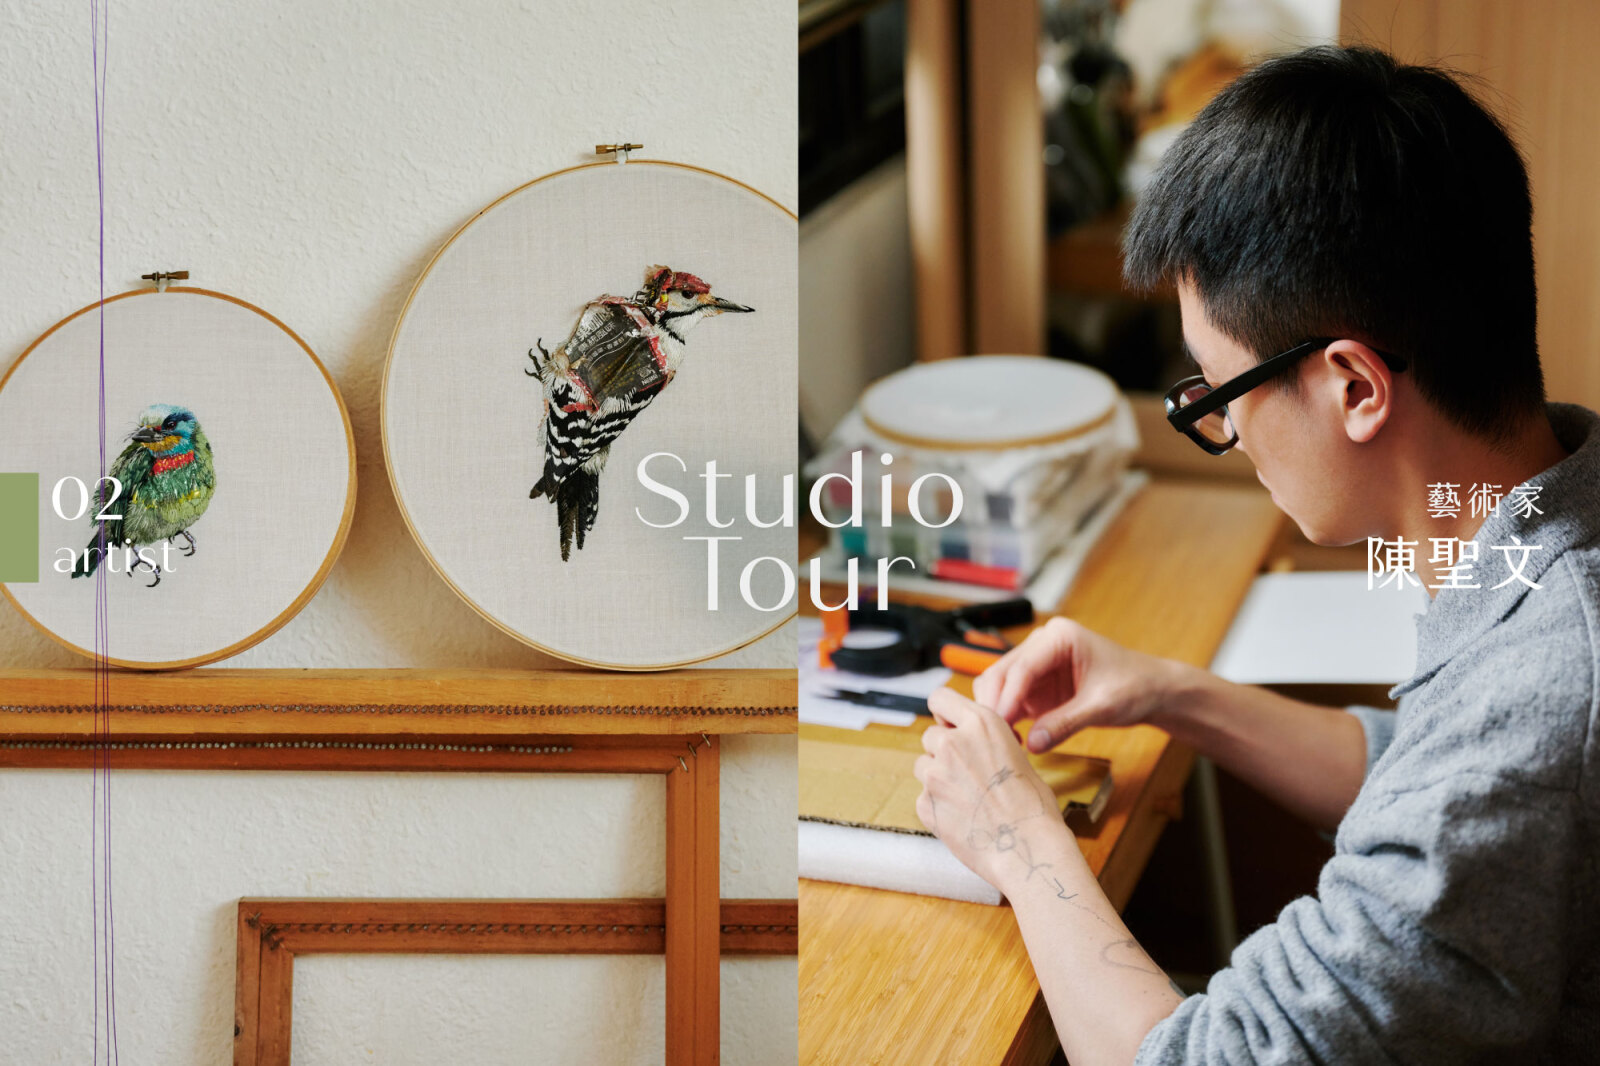 Studio tour｜專訪藝術家陳聖文：為什麼要分開？創作與生活、人類與自然，縫在一起了